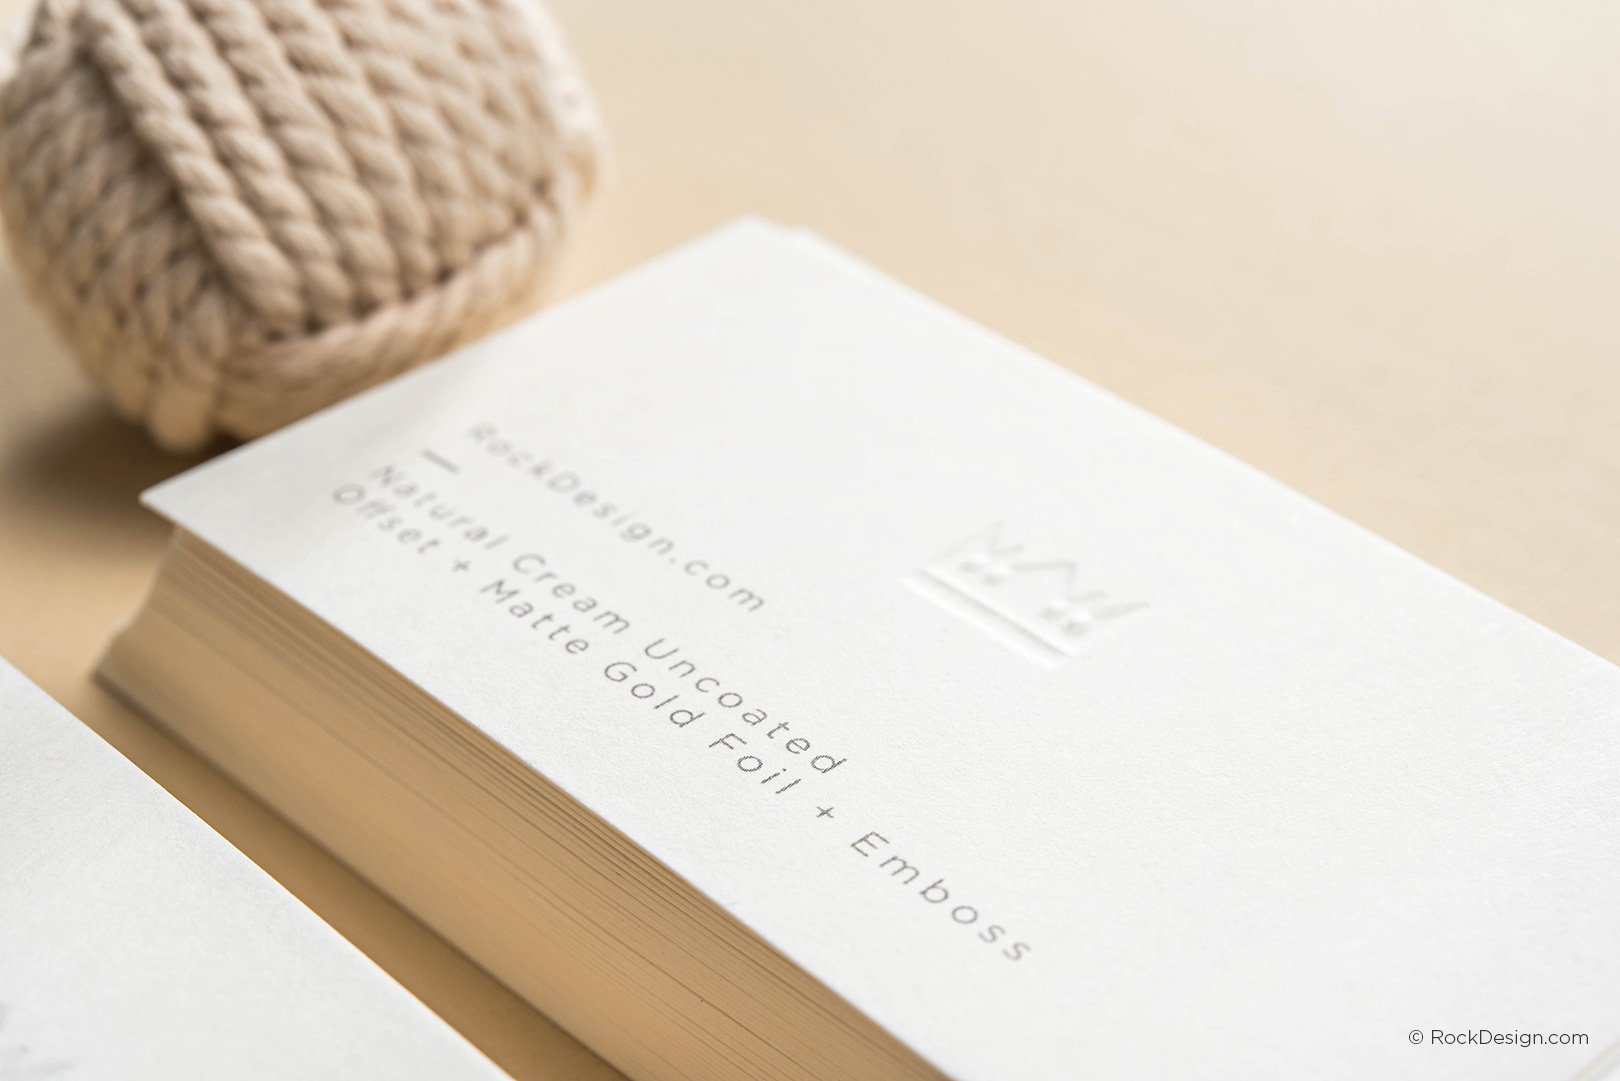 Single Letter Gold Foil Wax Seal – Megan Bruce Designs